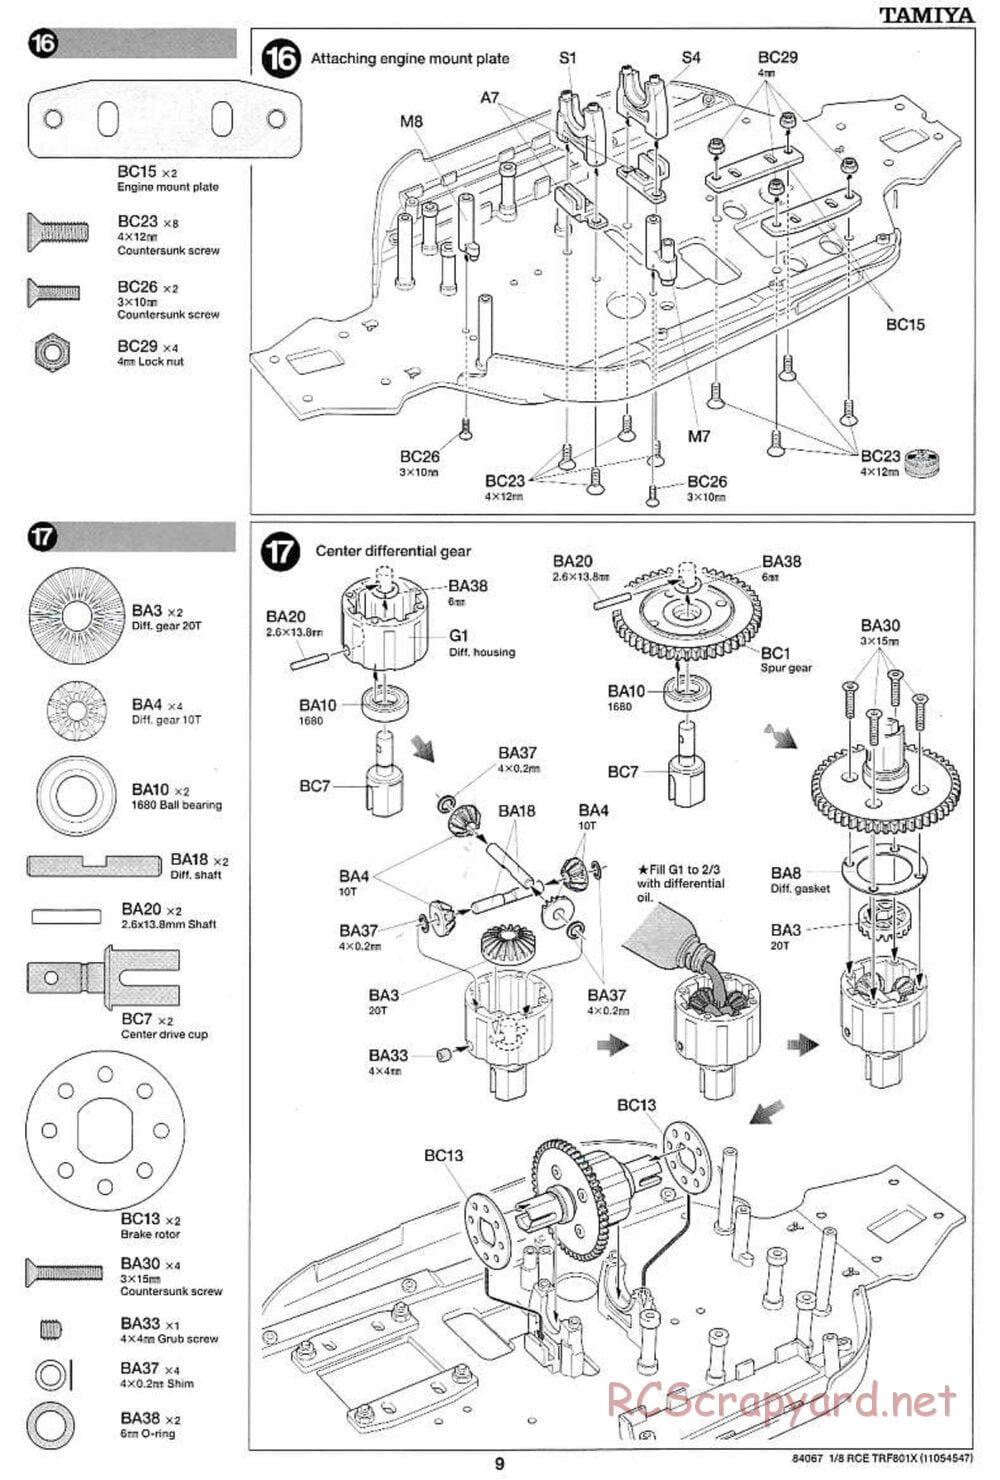 Tamiya - TRF801X Chassis - Manual - Page 9